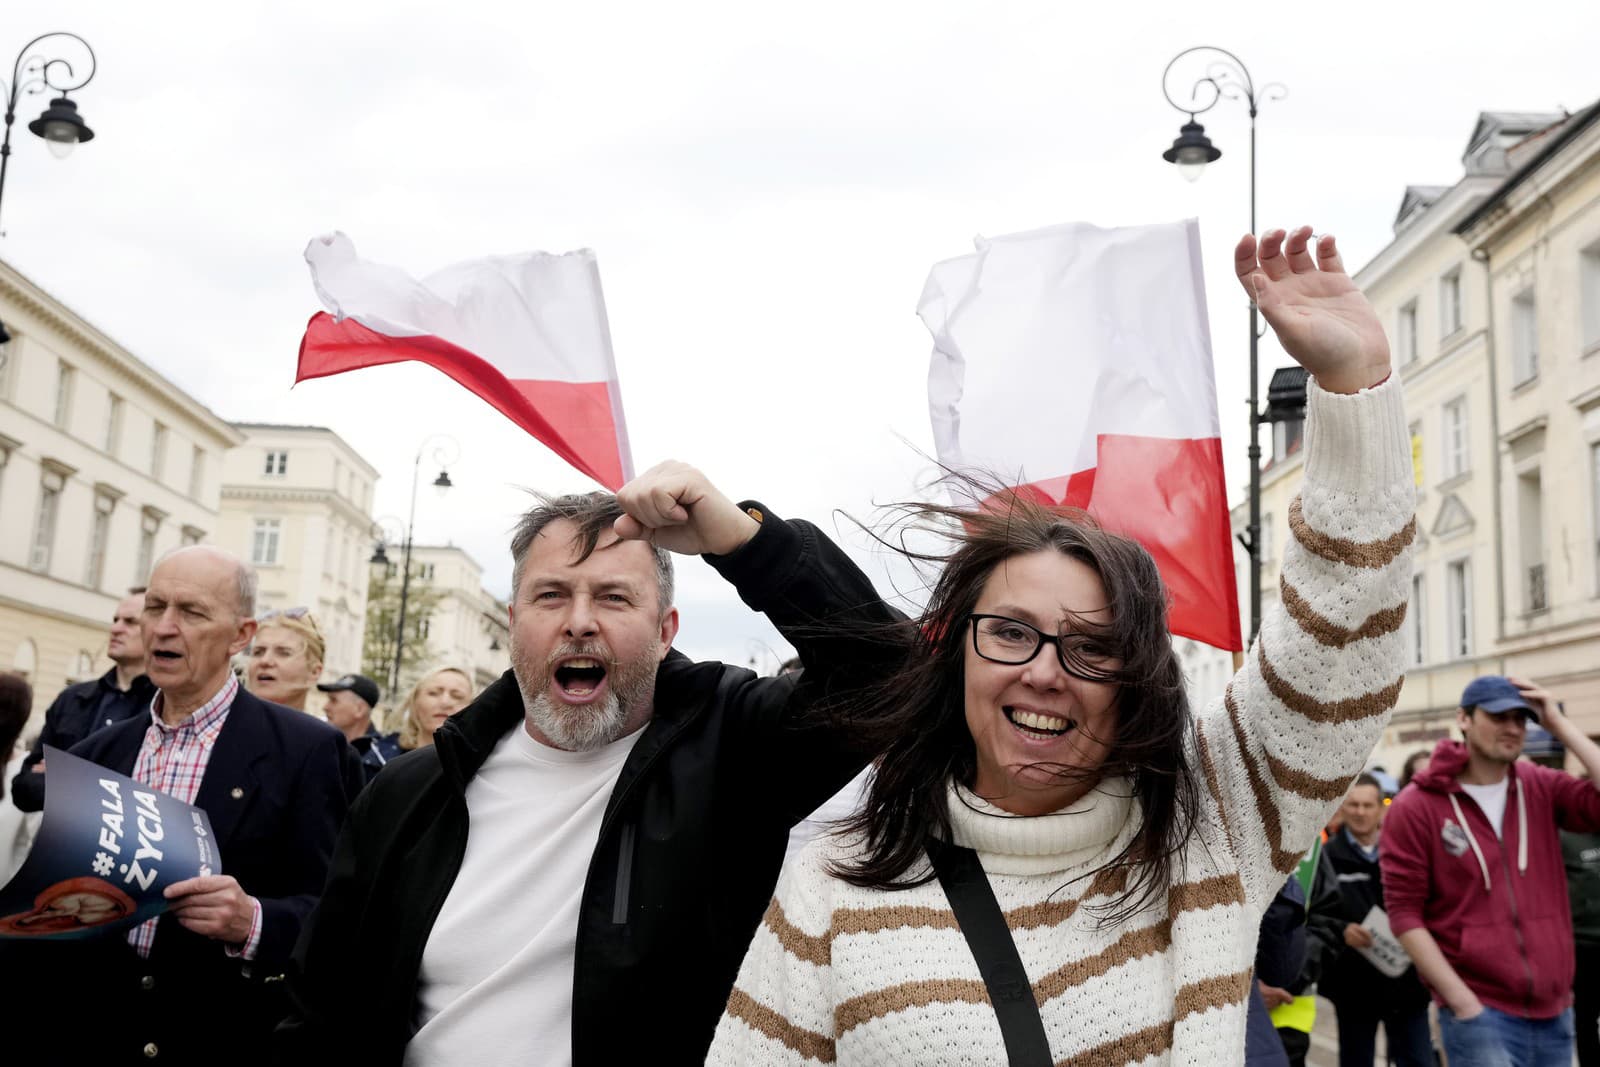 Odporcovia liberalizácie interrupcií v Poľsku vyšli do ulíc Varšavy